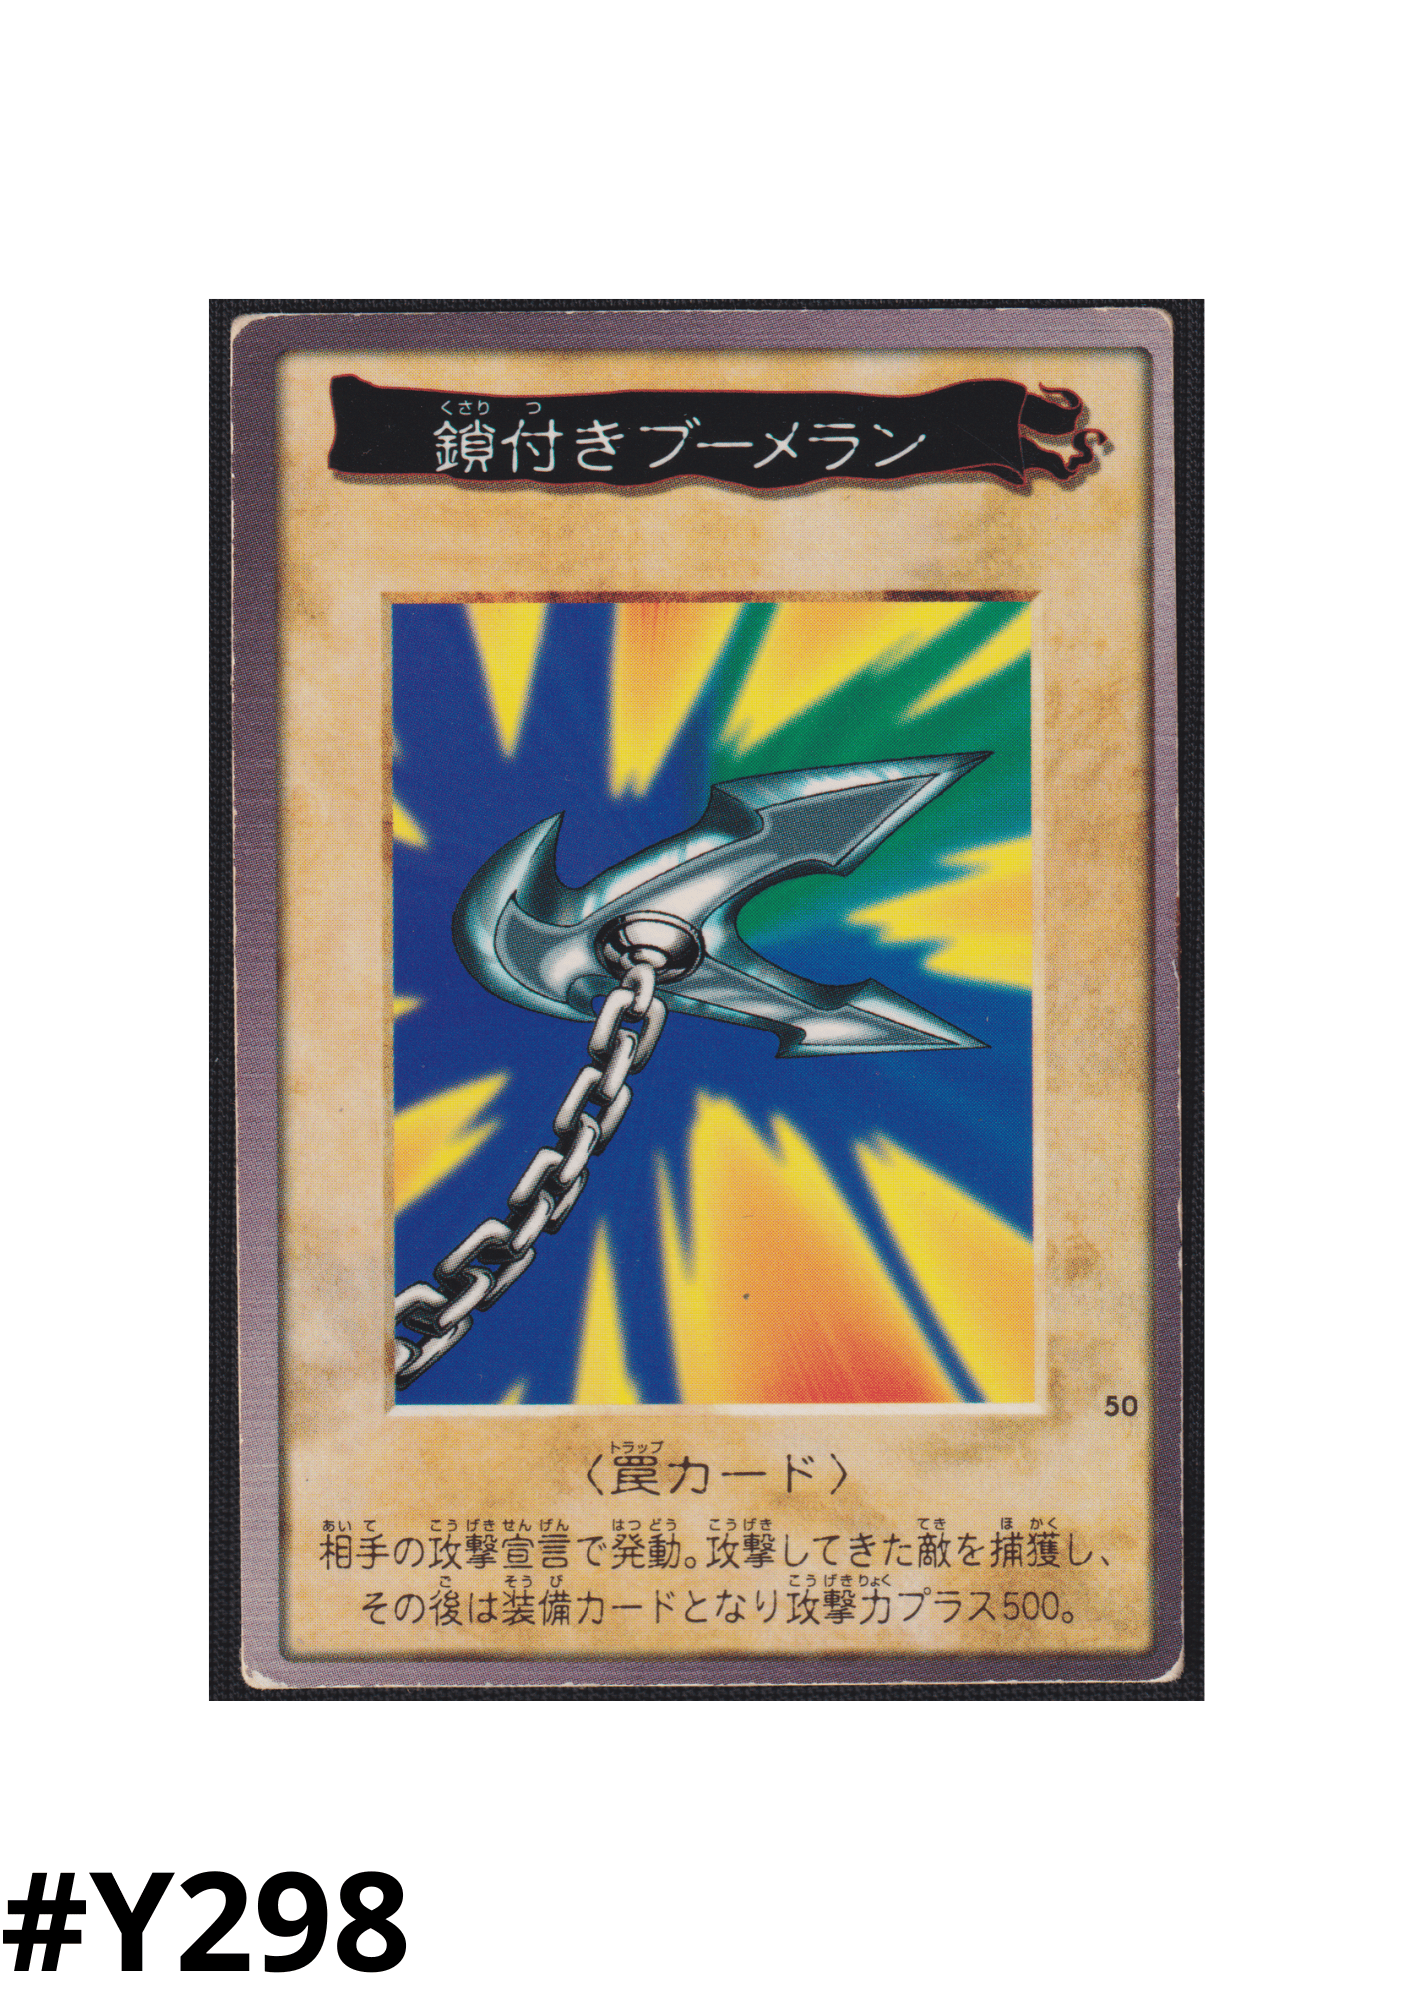 Yu Gi Oh! | Bandai Card No.50 | Kunai with Chain ChitoroShop